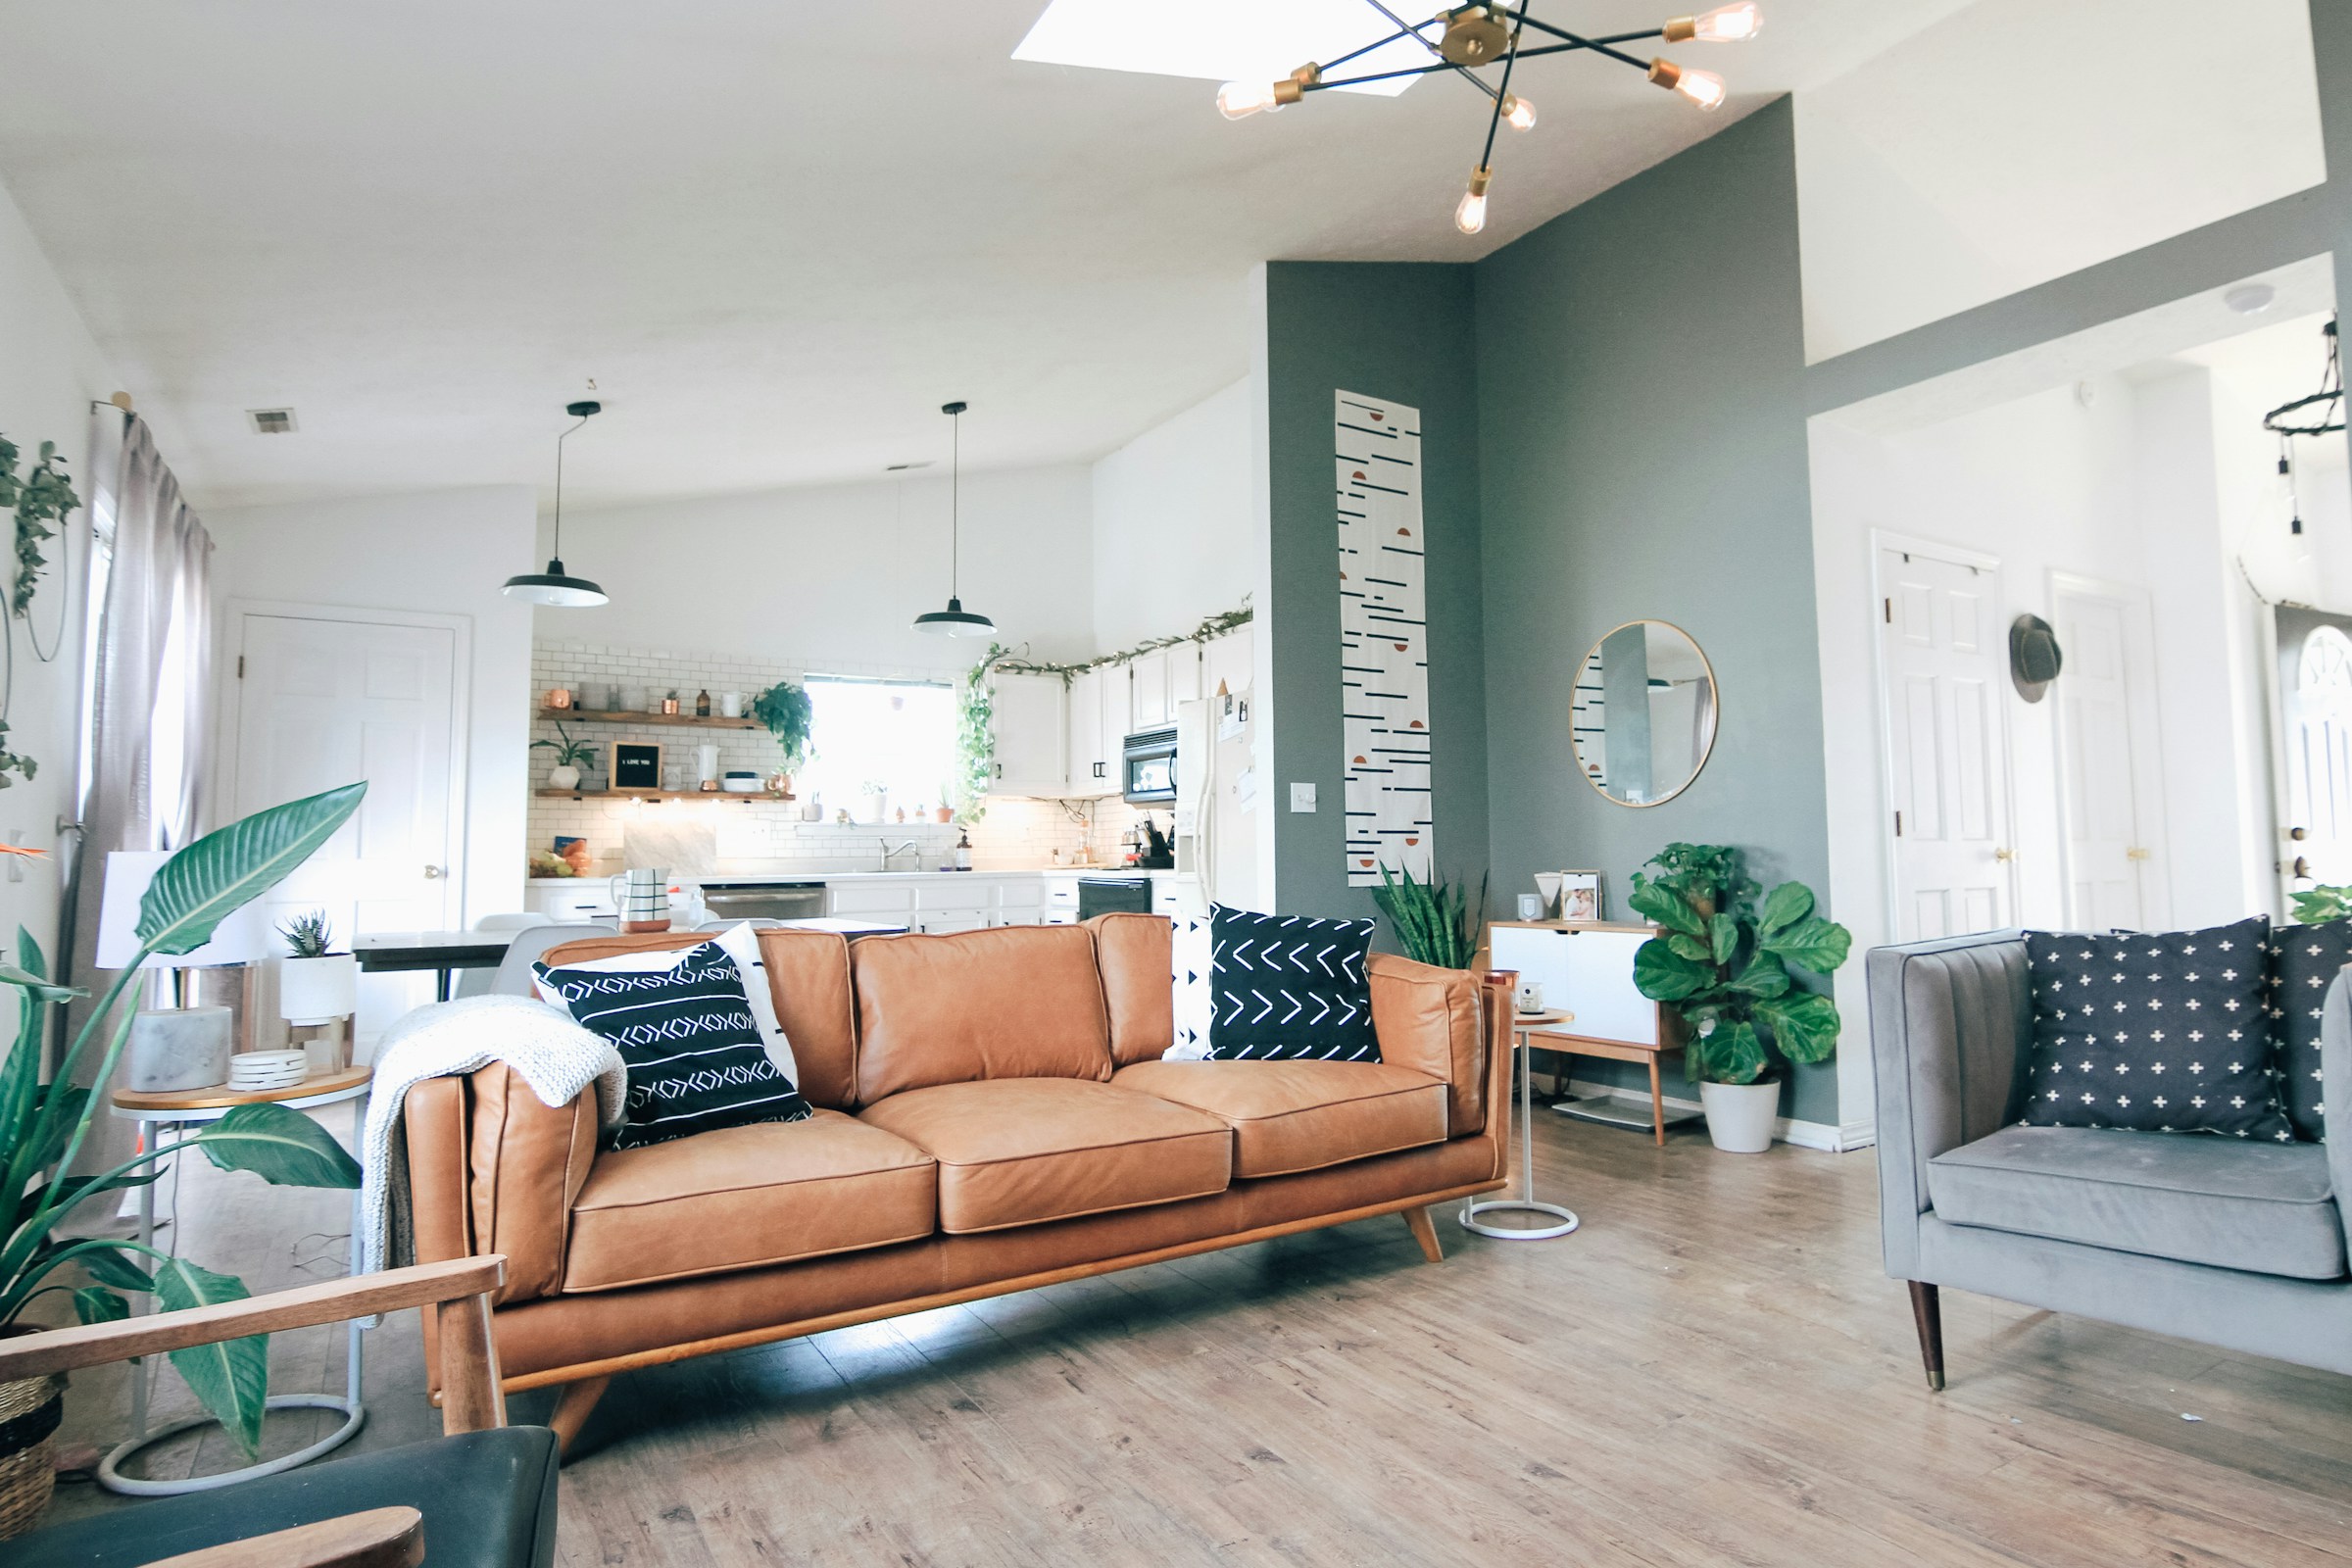 A clean living room | Source: Unsplash